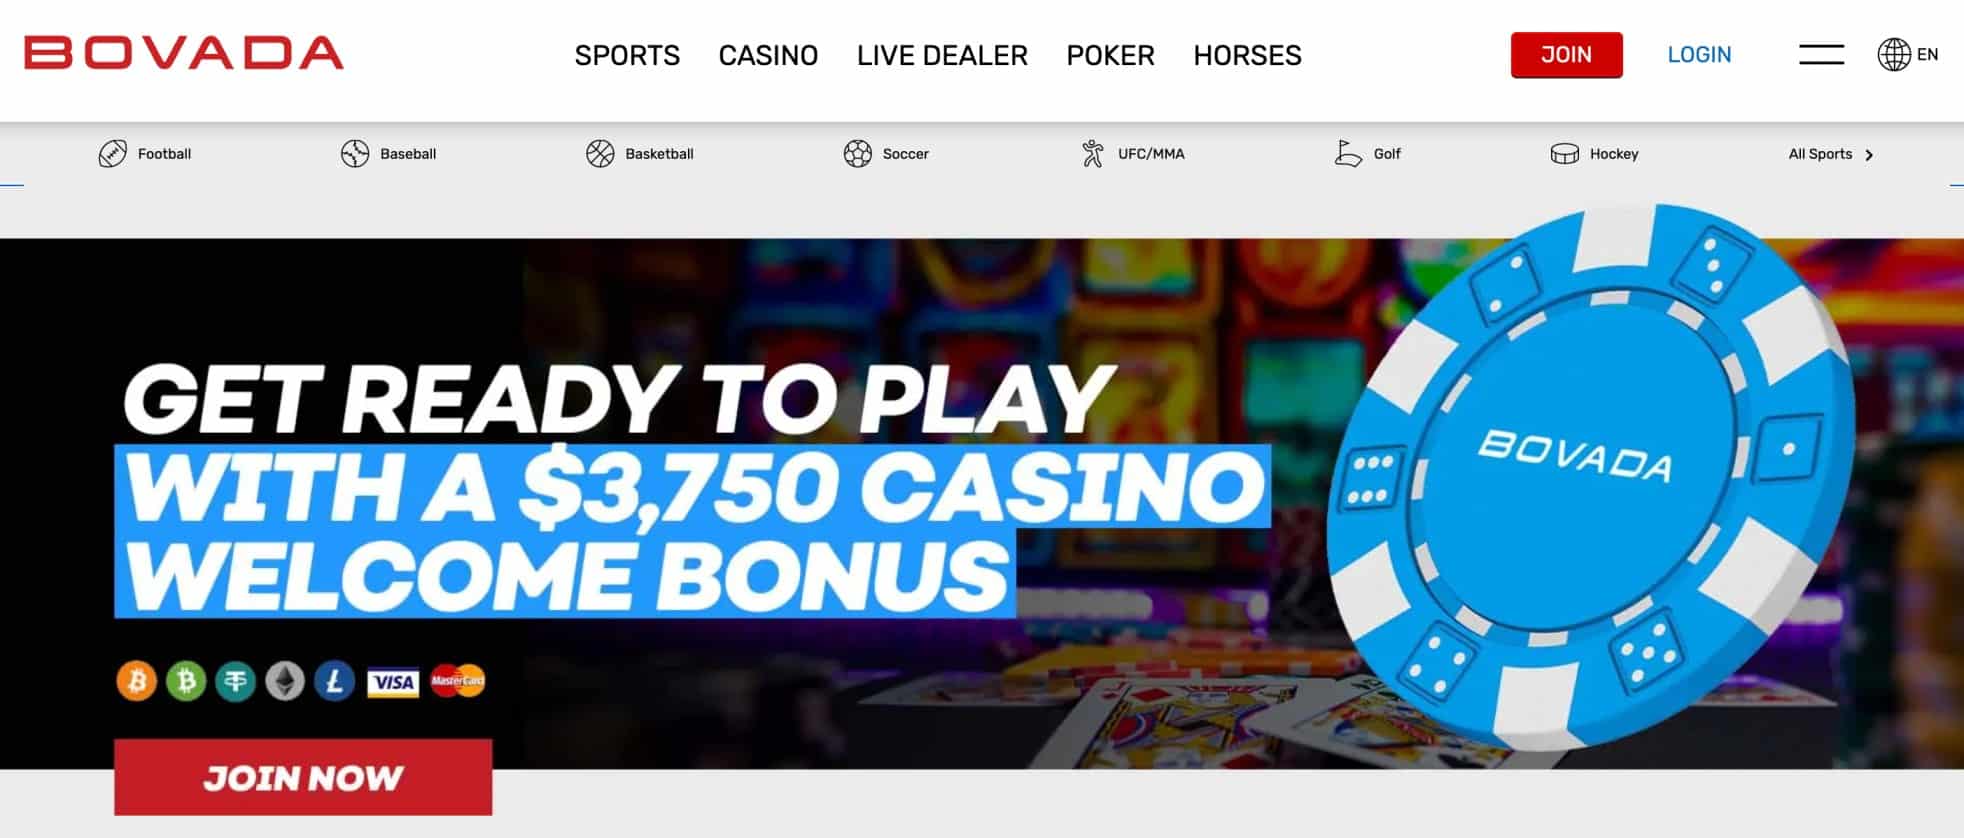 Bovada casino welcome bonus